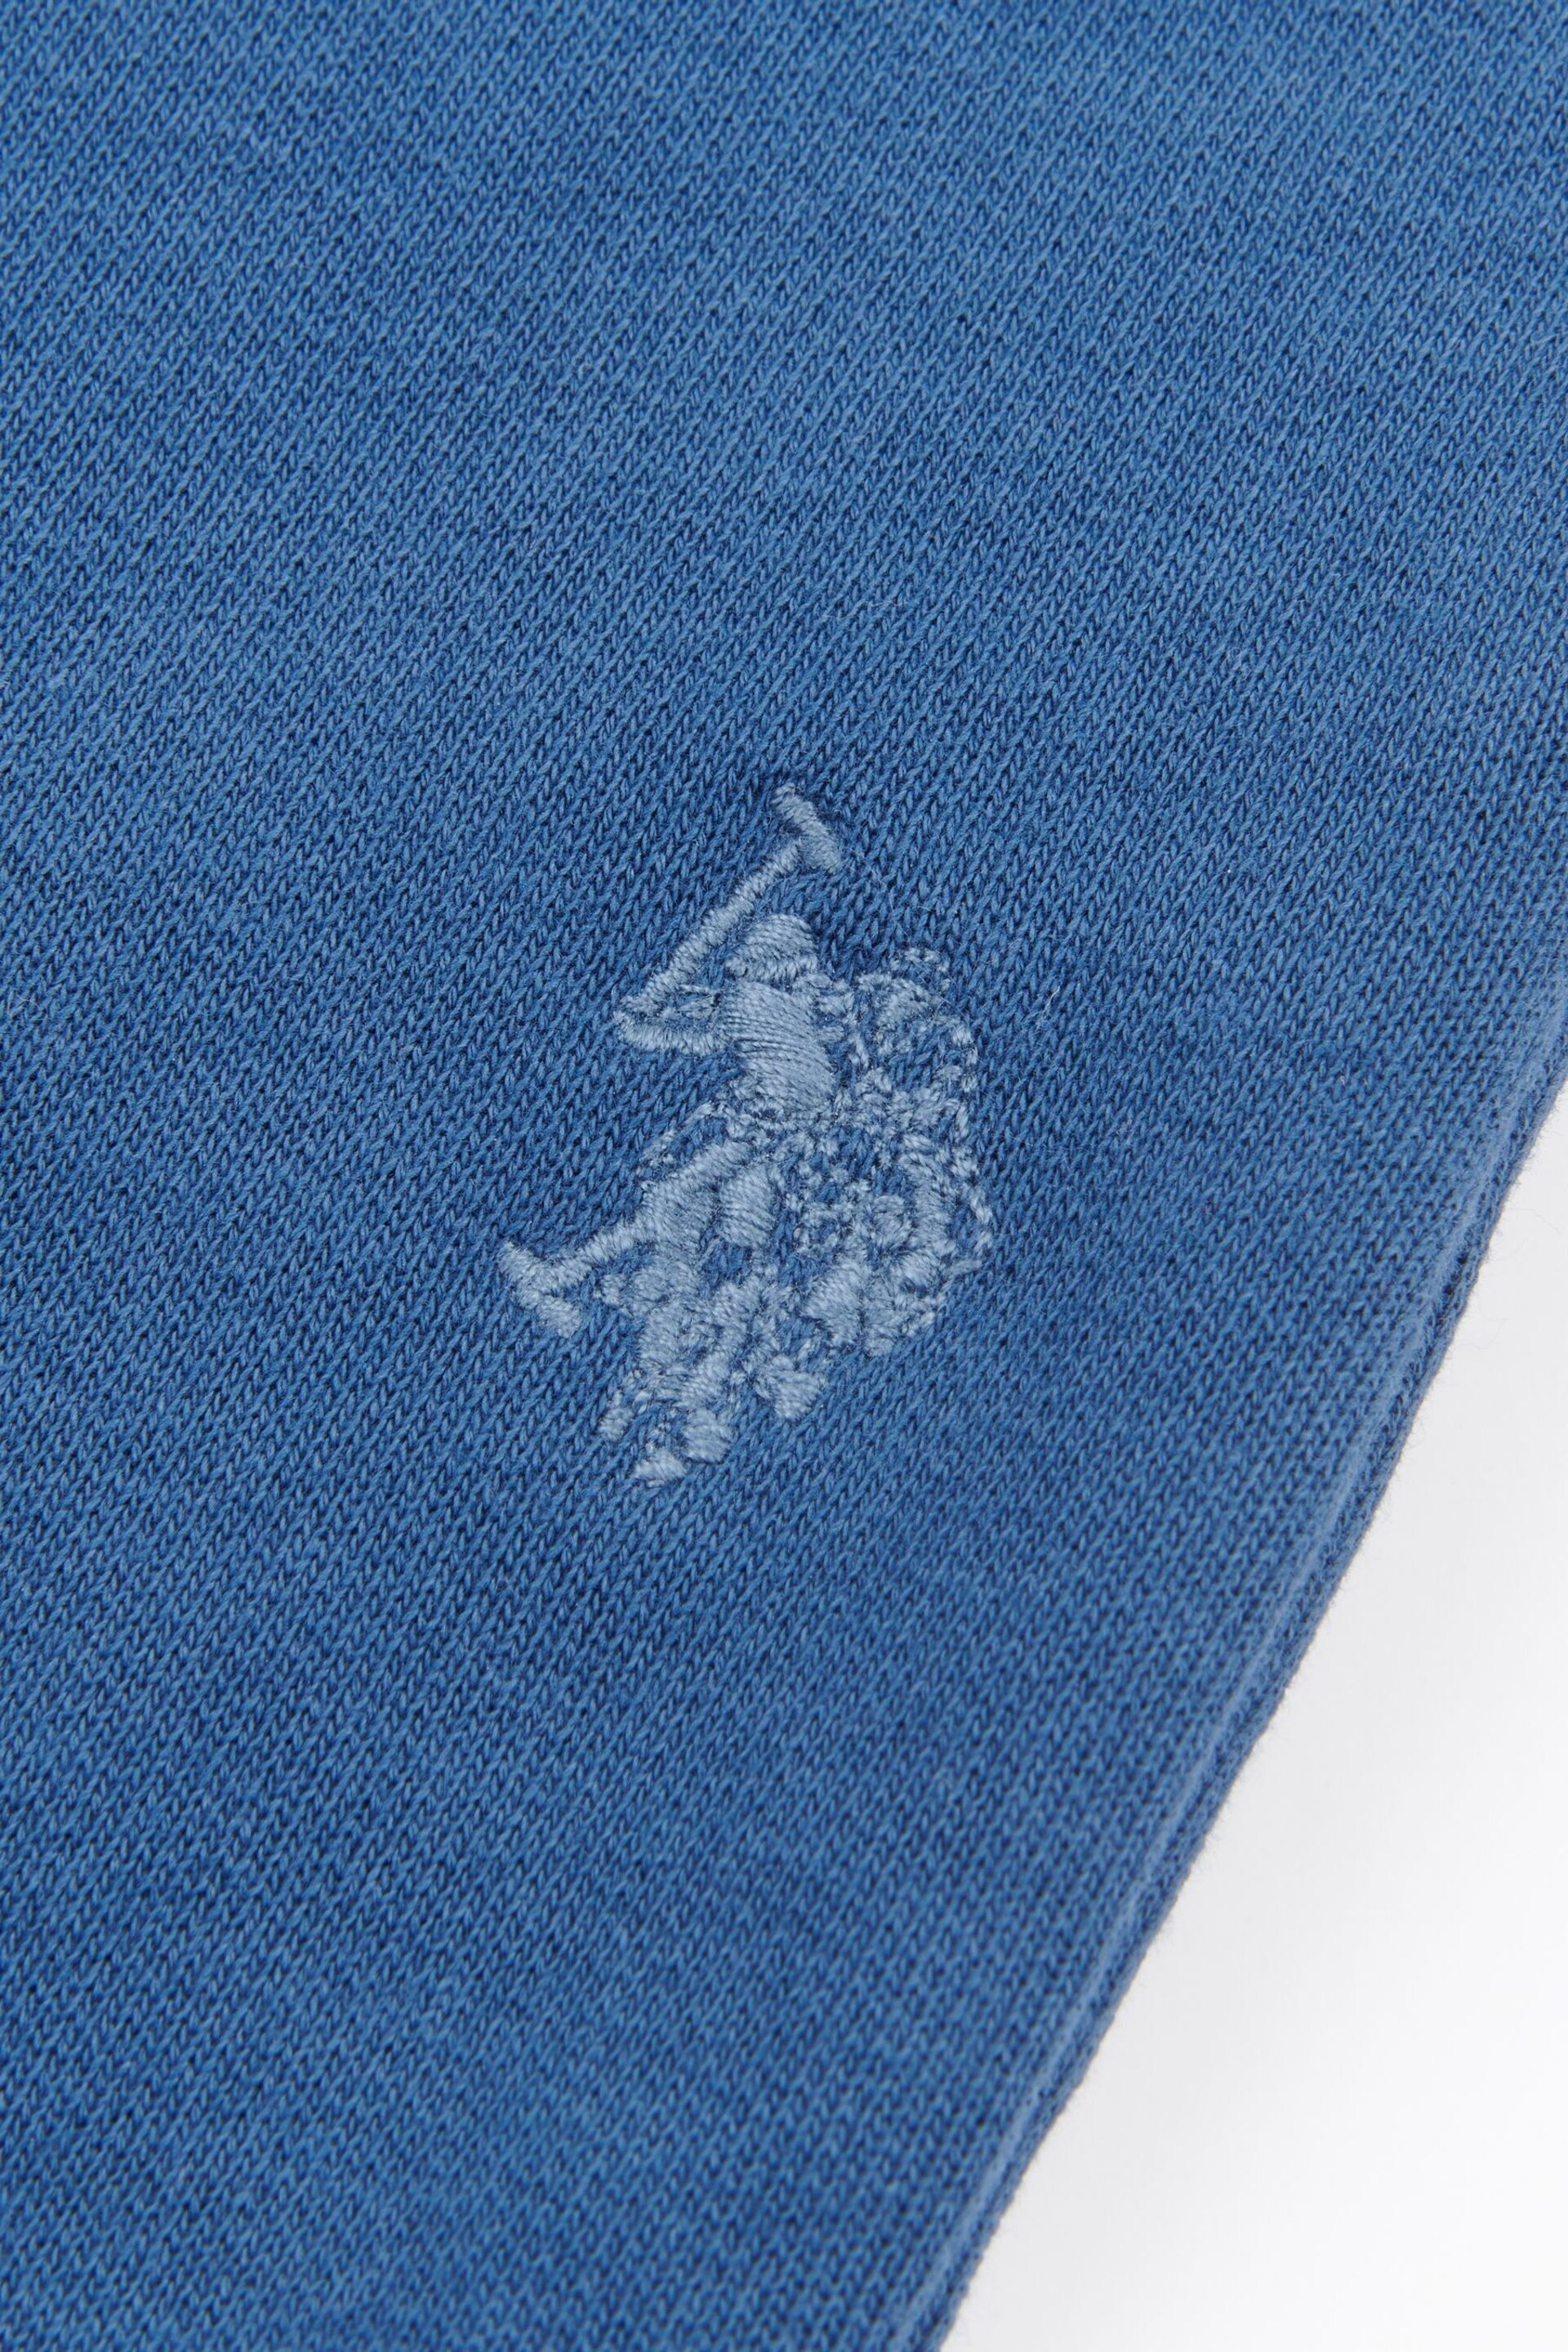 U.S. Polo Assn Blue Core F/T Sweat Shorts - Image 3 of 3